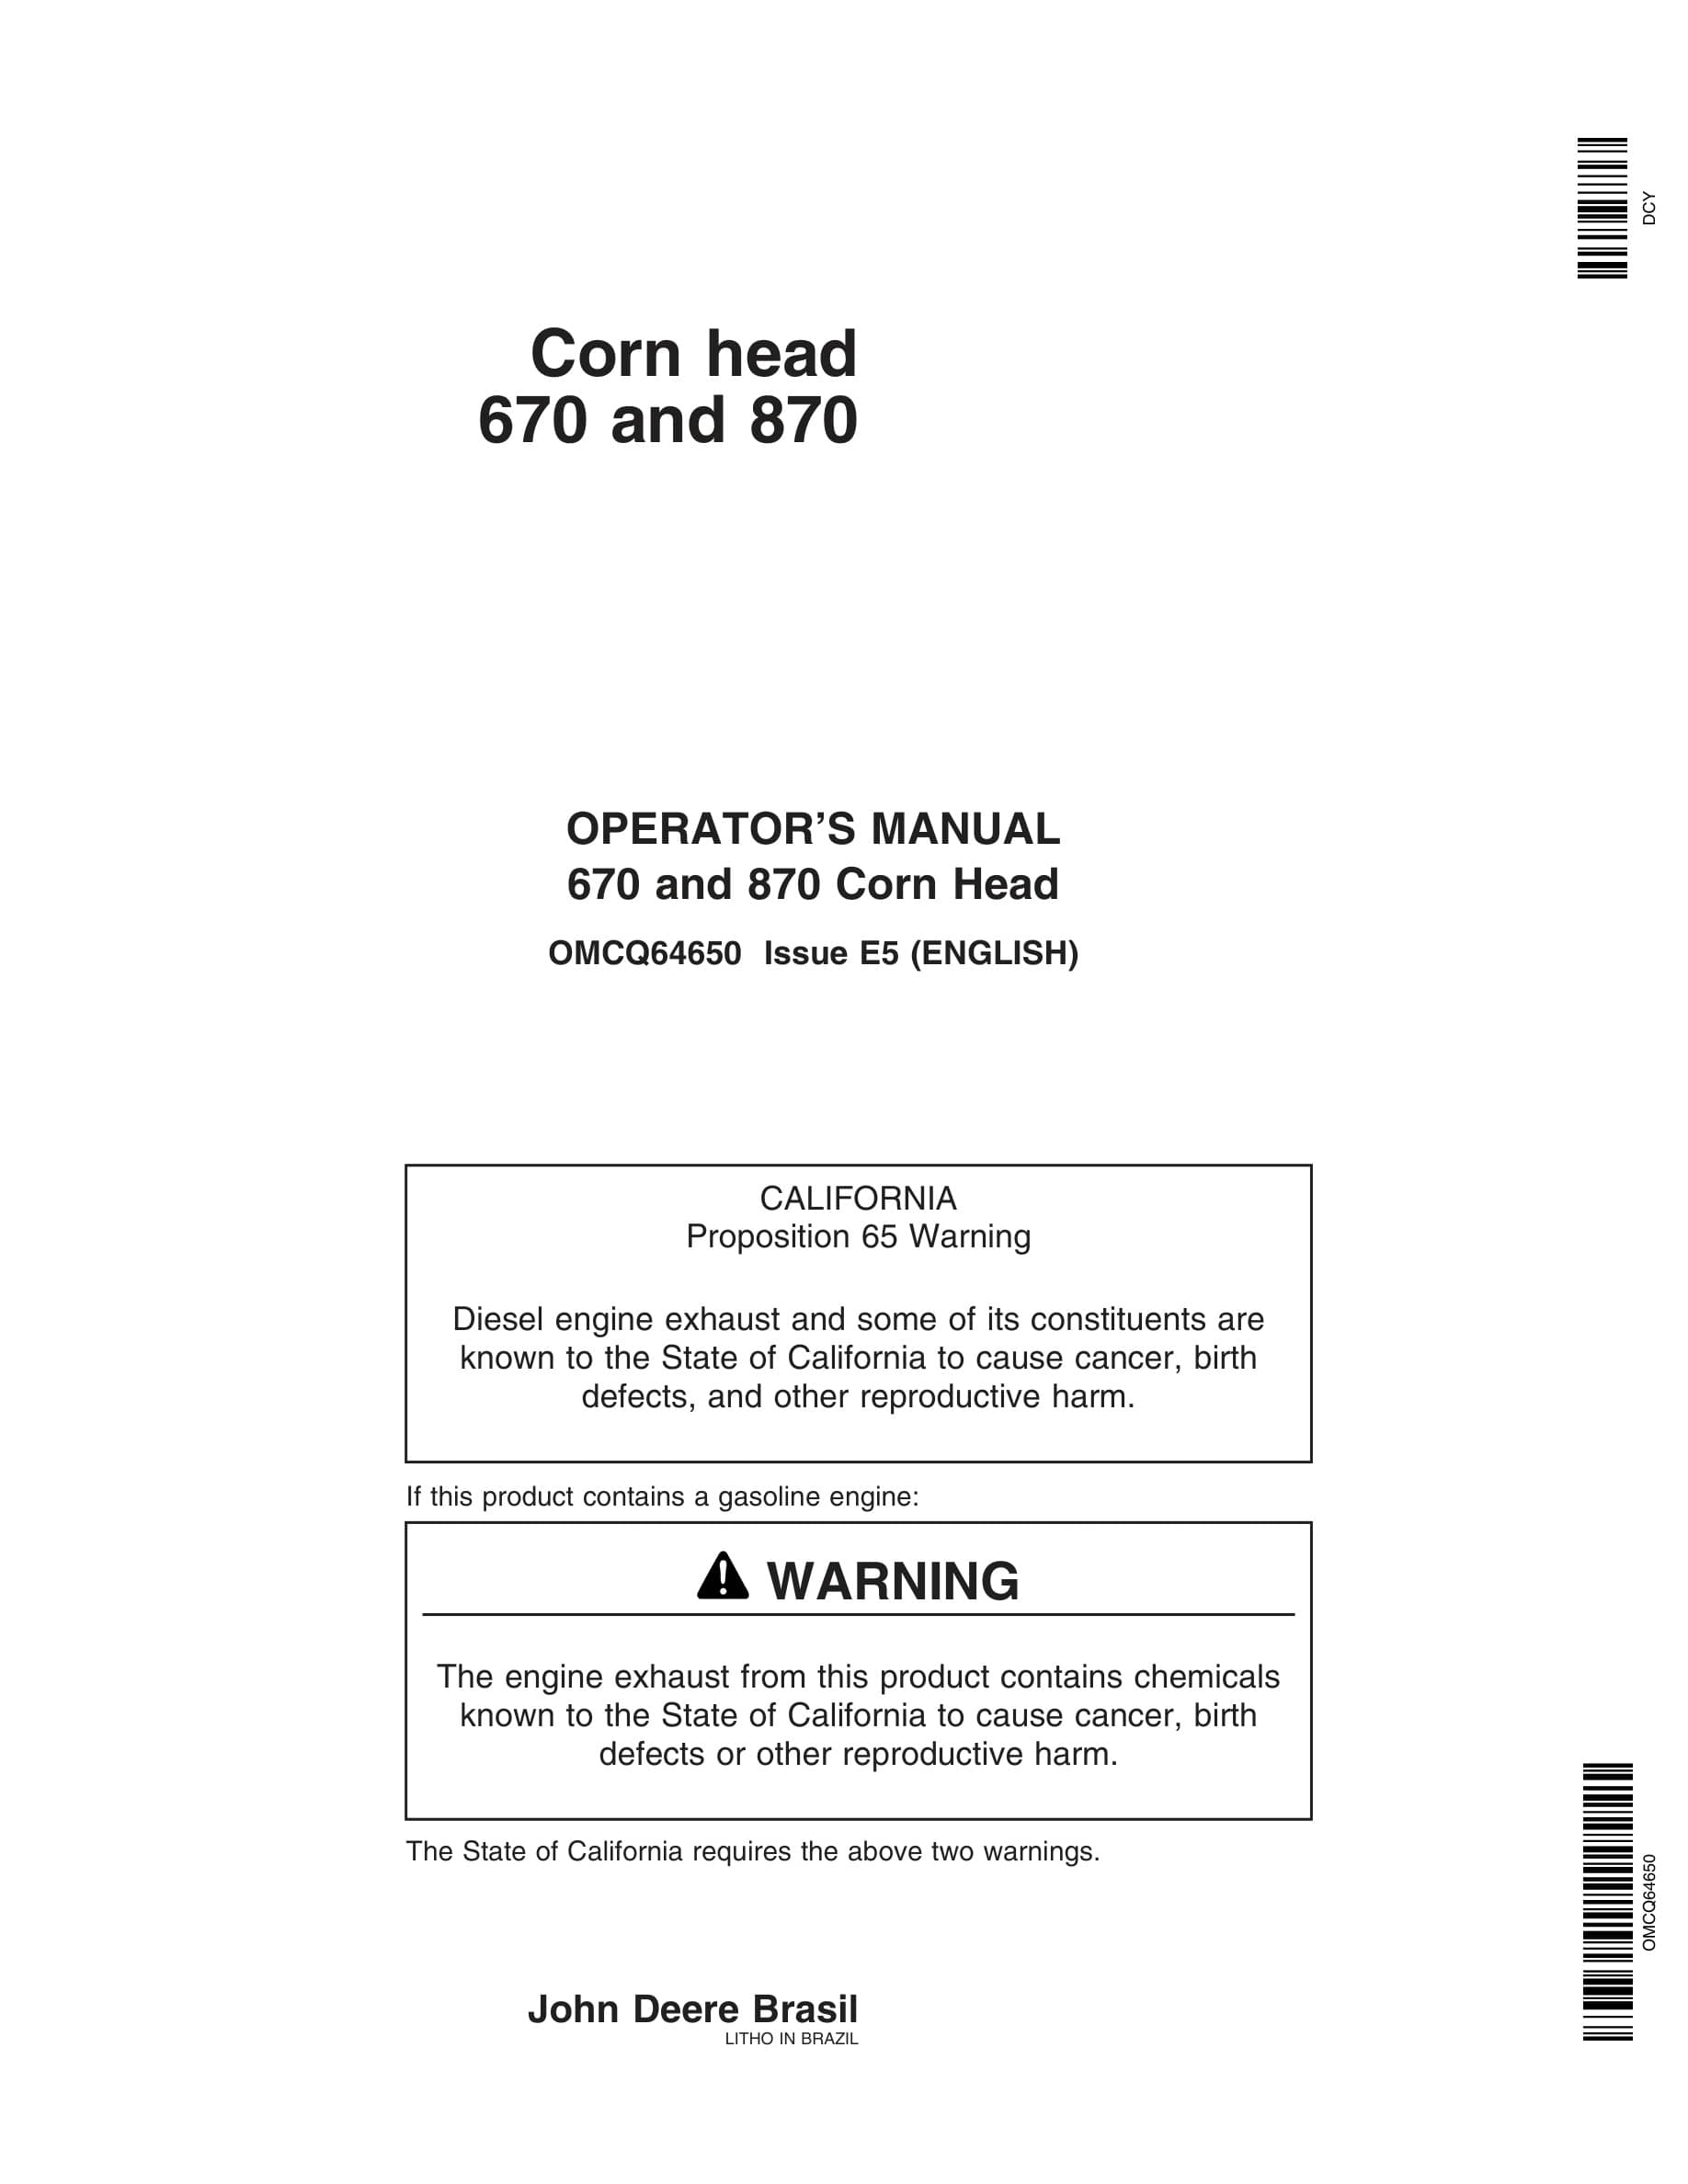 John Deere 670 and 870 Corn Head Operator Manual OMCQ64650-1